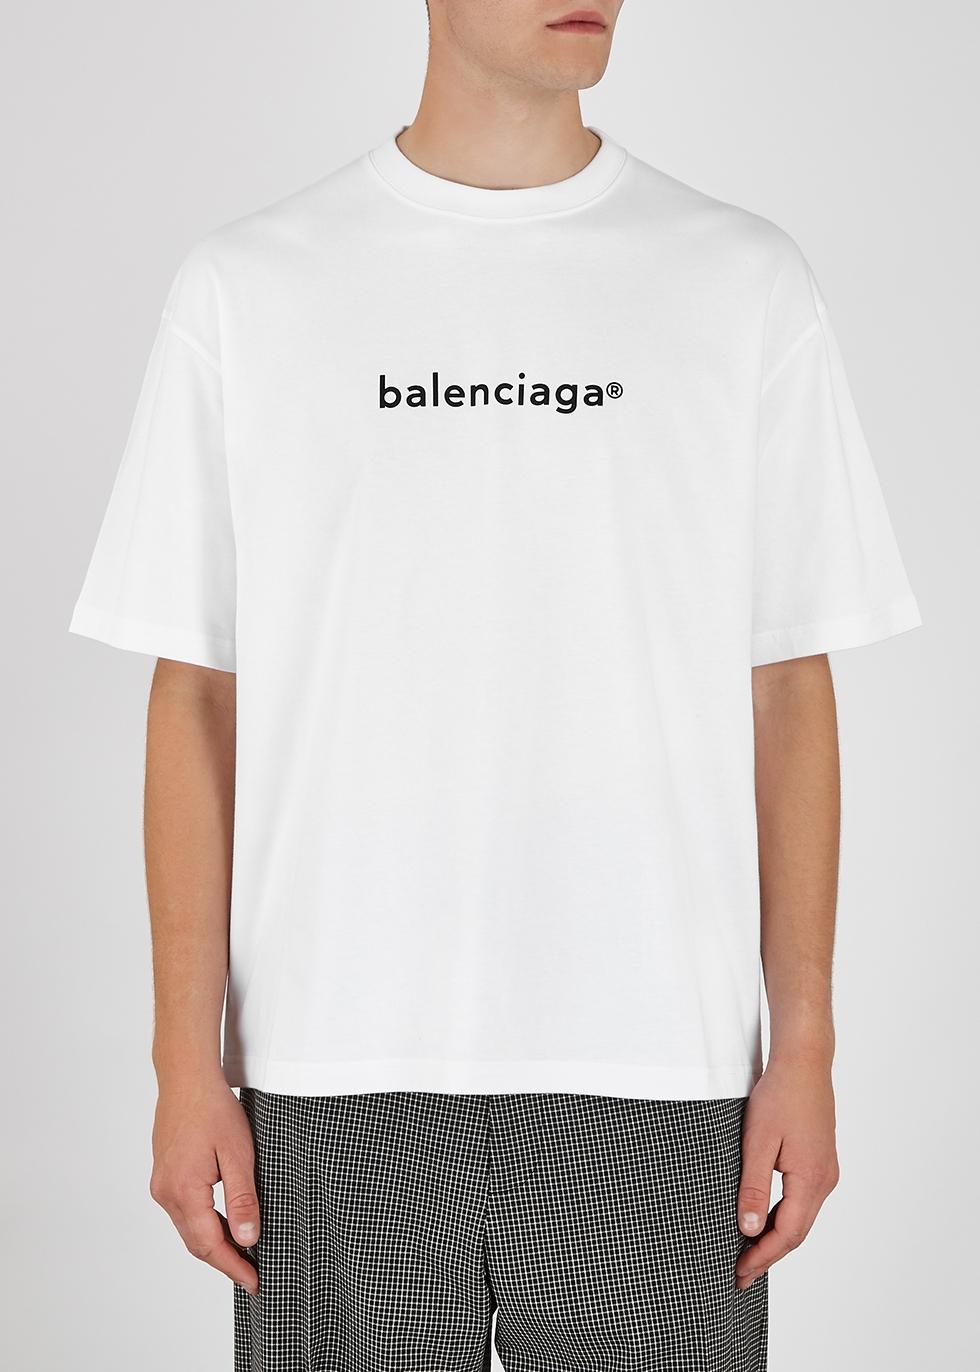 Balenciaga Copyright Logo-print Cotton T-shirt in White for Men - Lyst